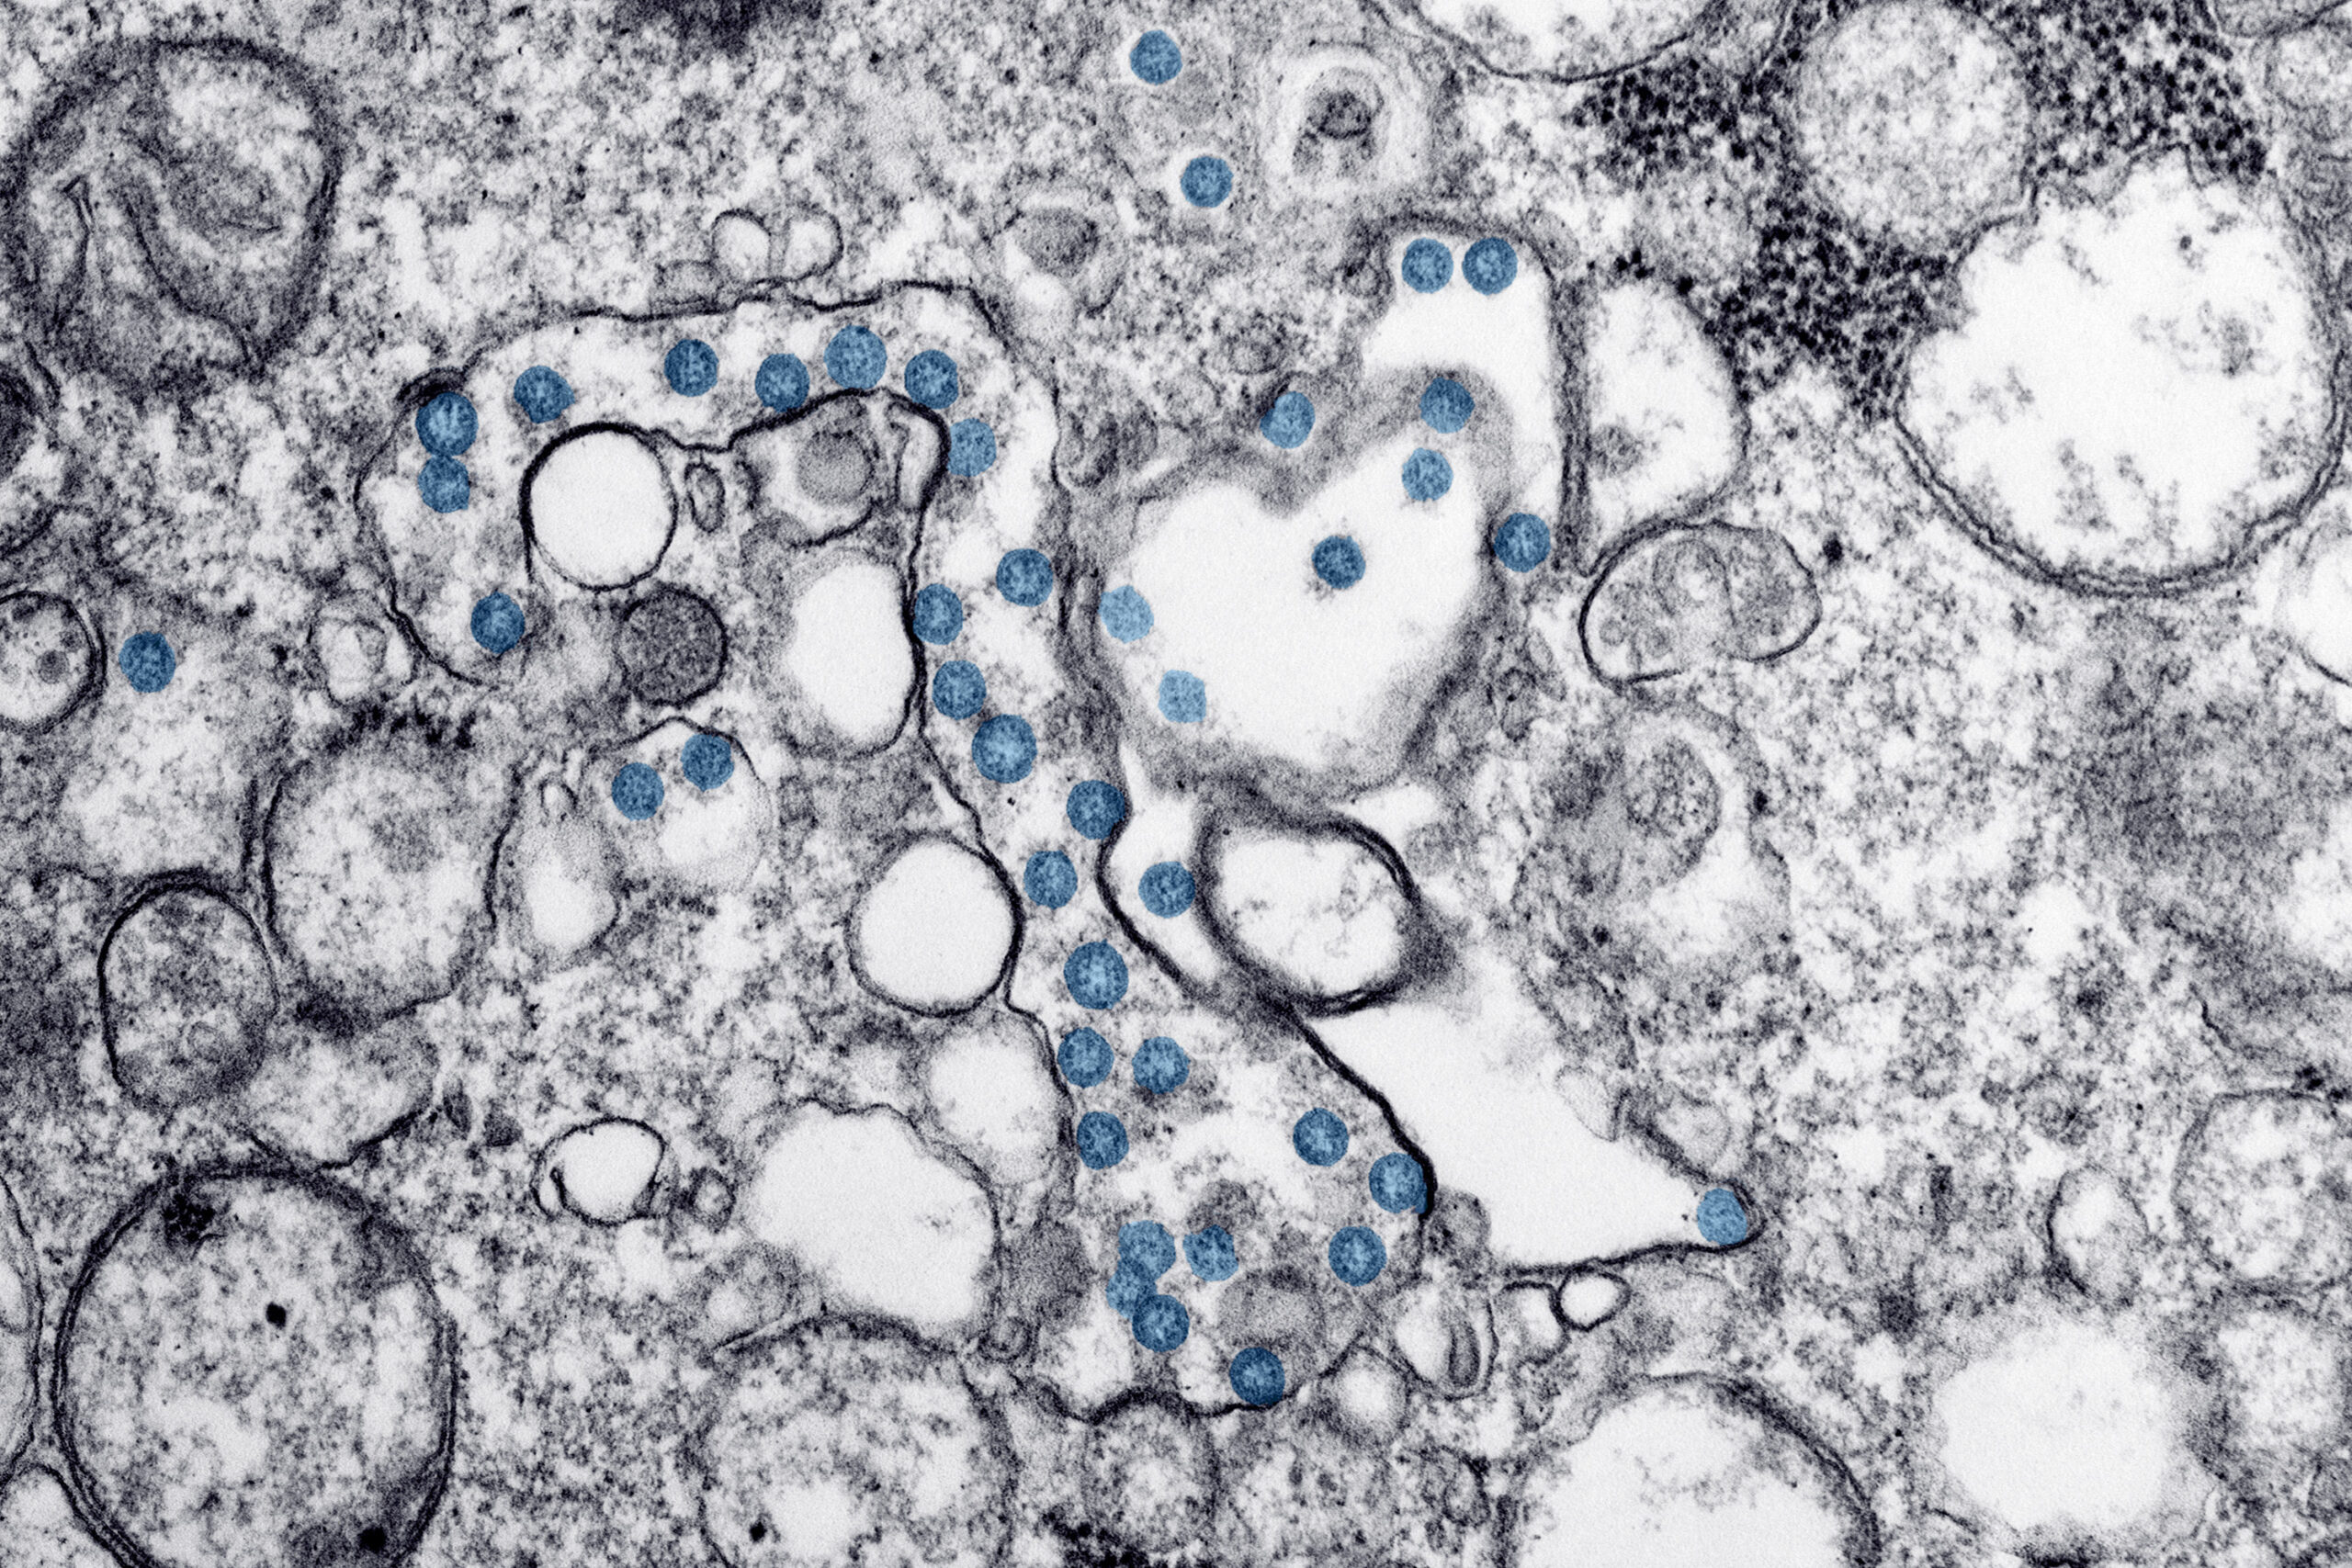 A microscopic image of the coronavirus